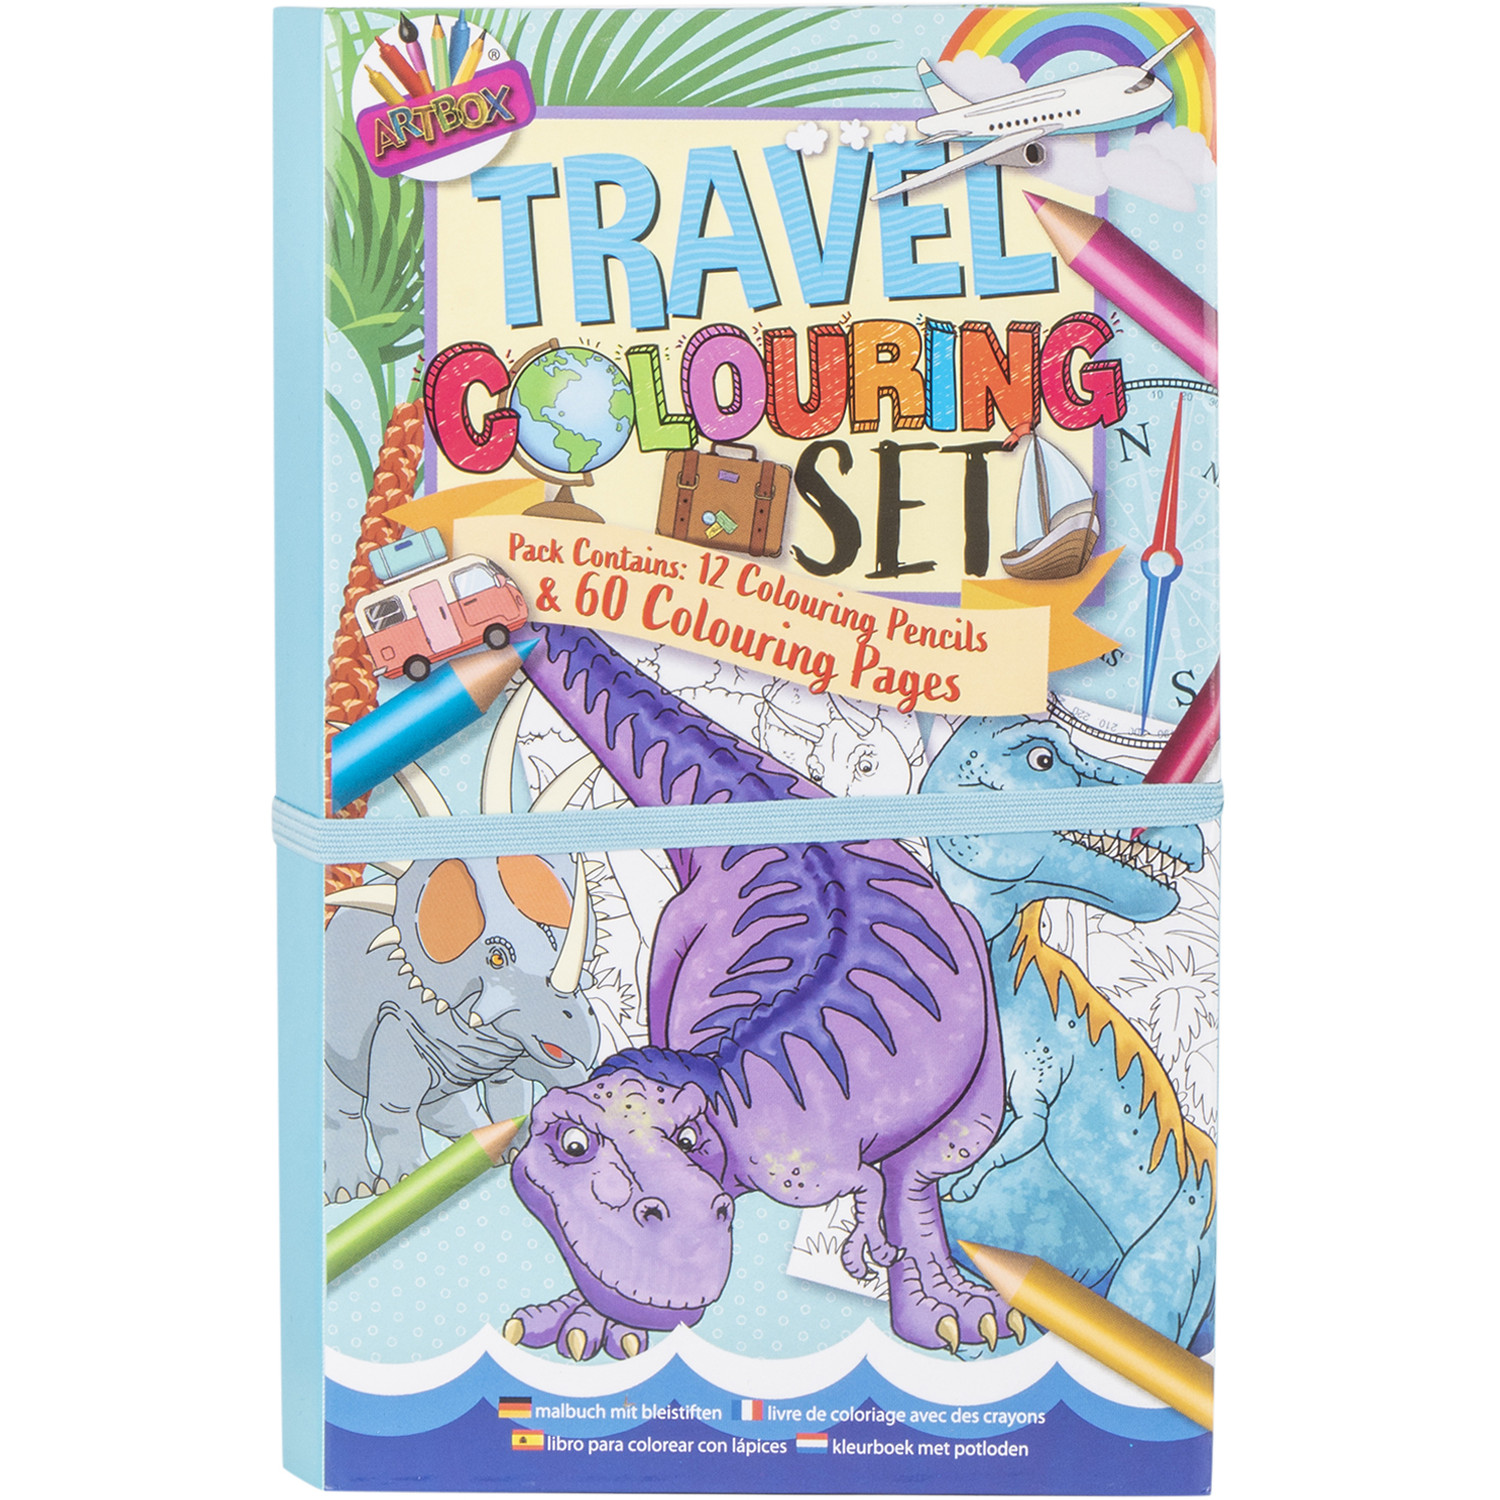 Artbox Travel Colouring Set Image